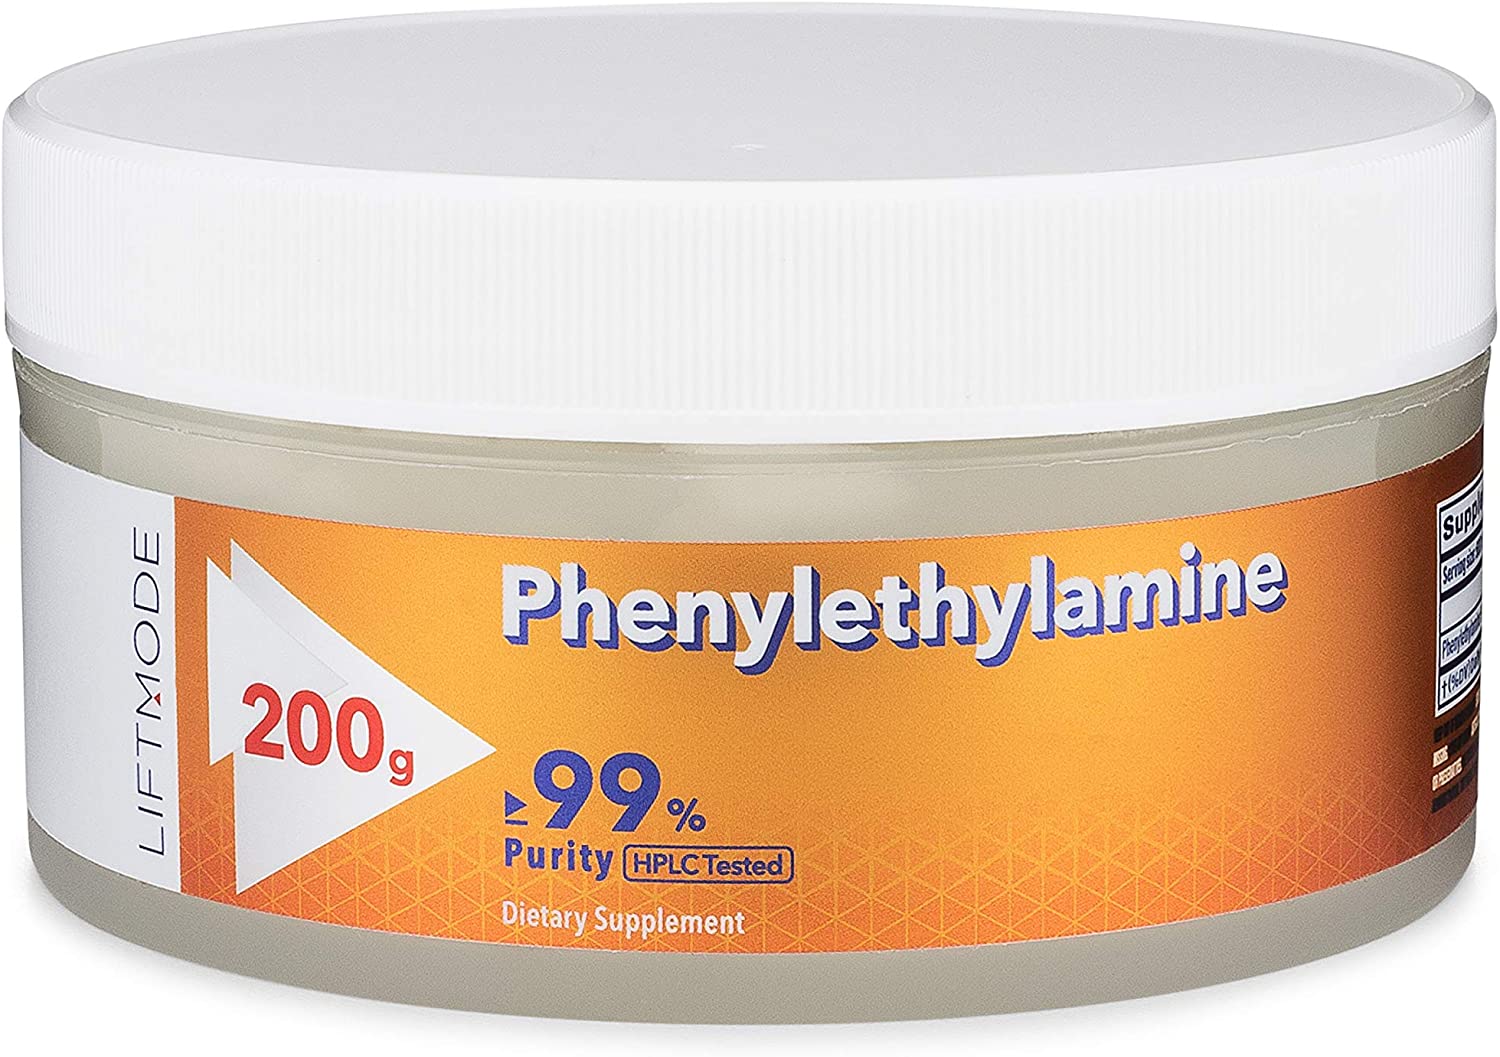 Liftmode Phenylethylamine - 200 g